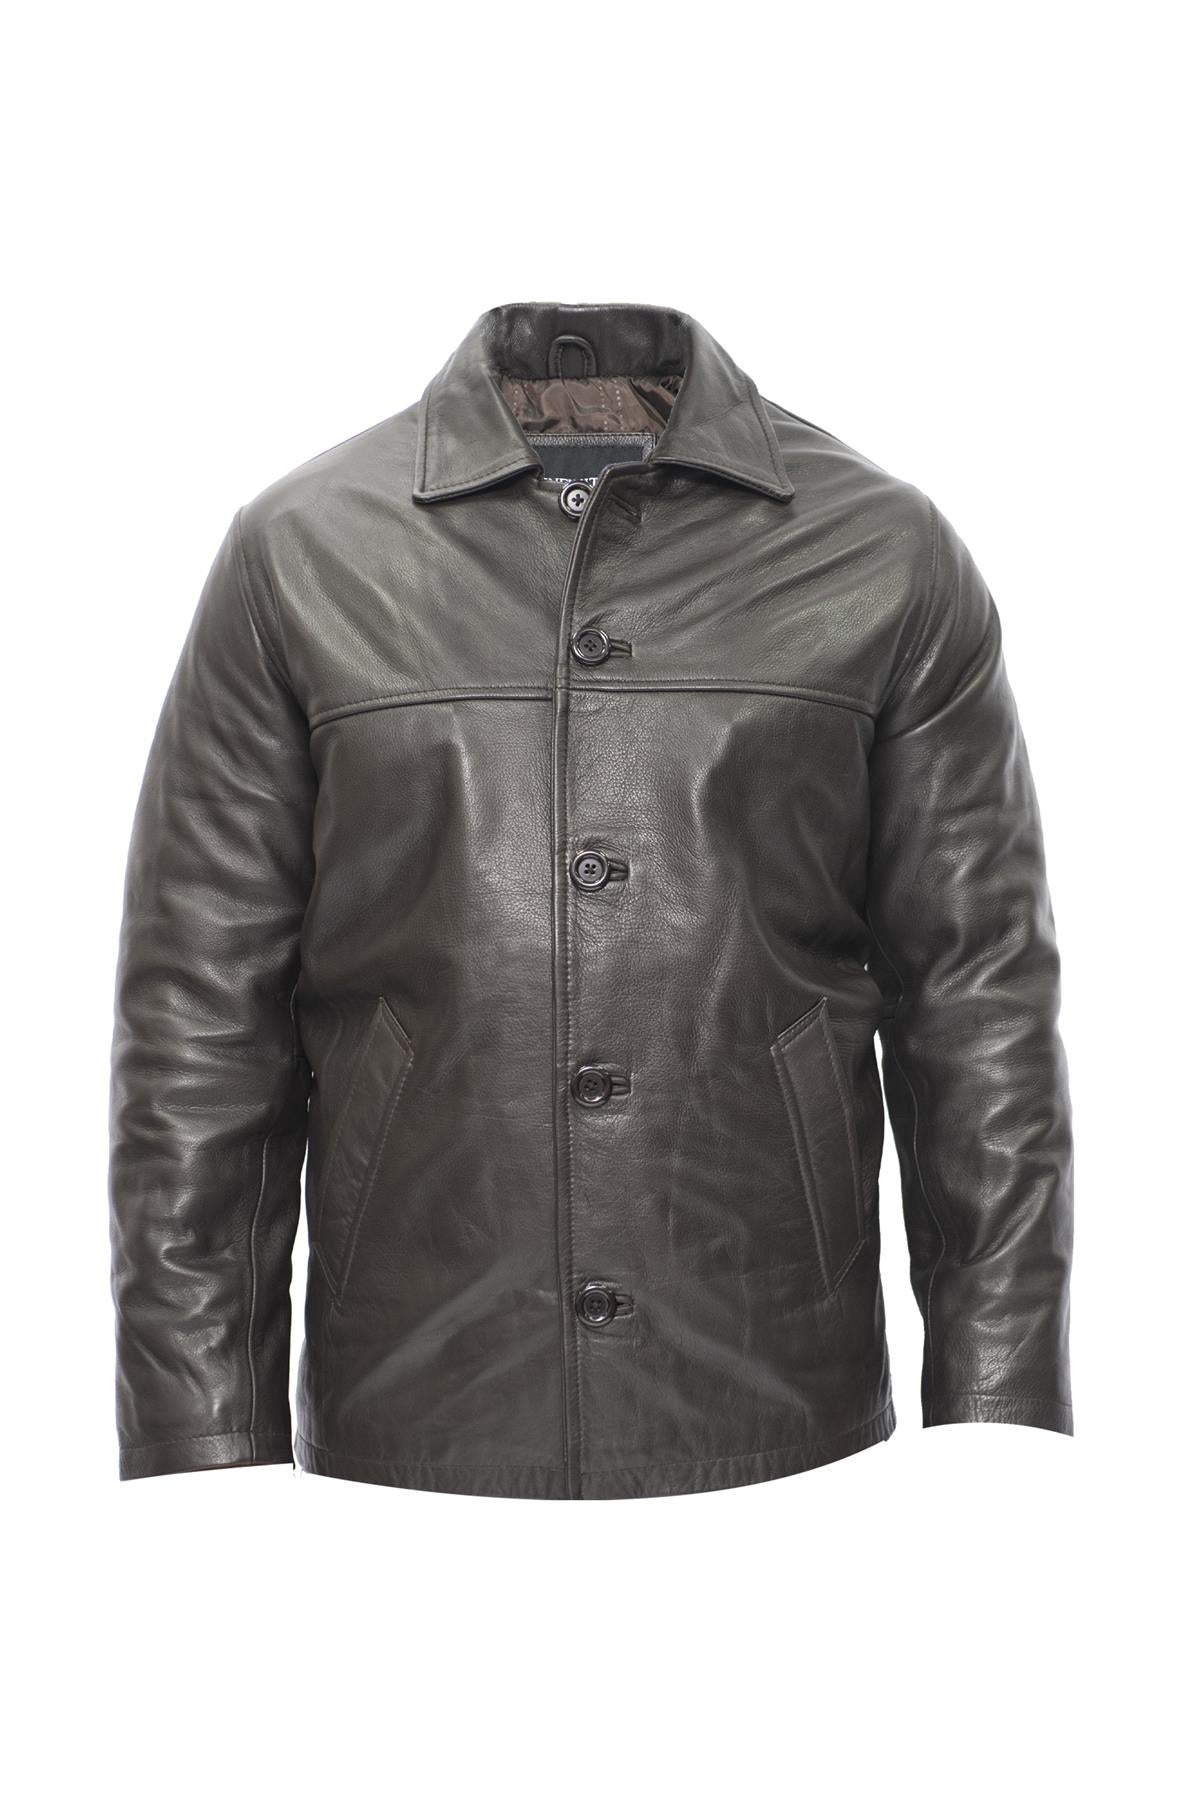 Mens Cowhide Leather Box Jacket-Mendoza